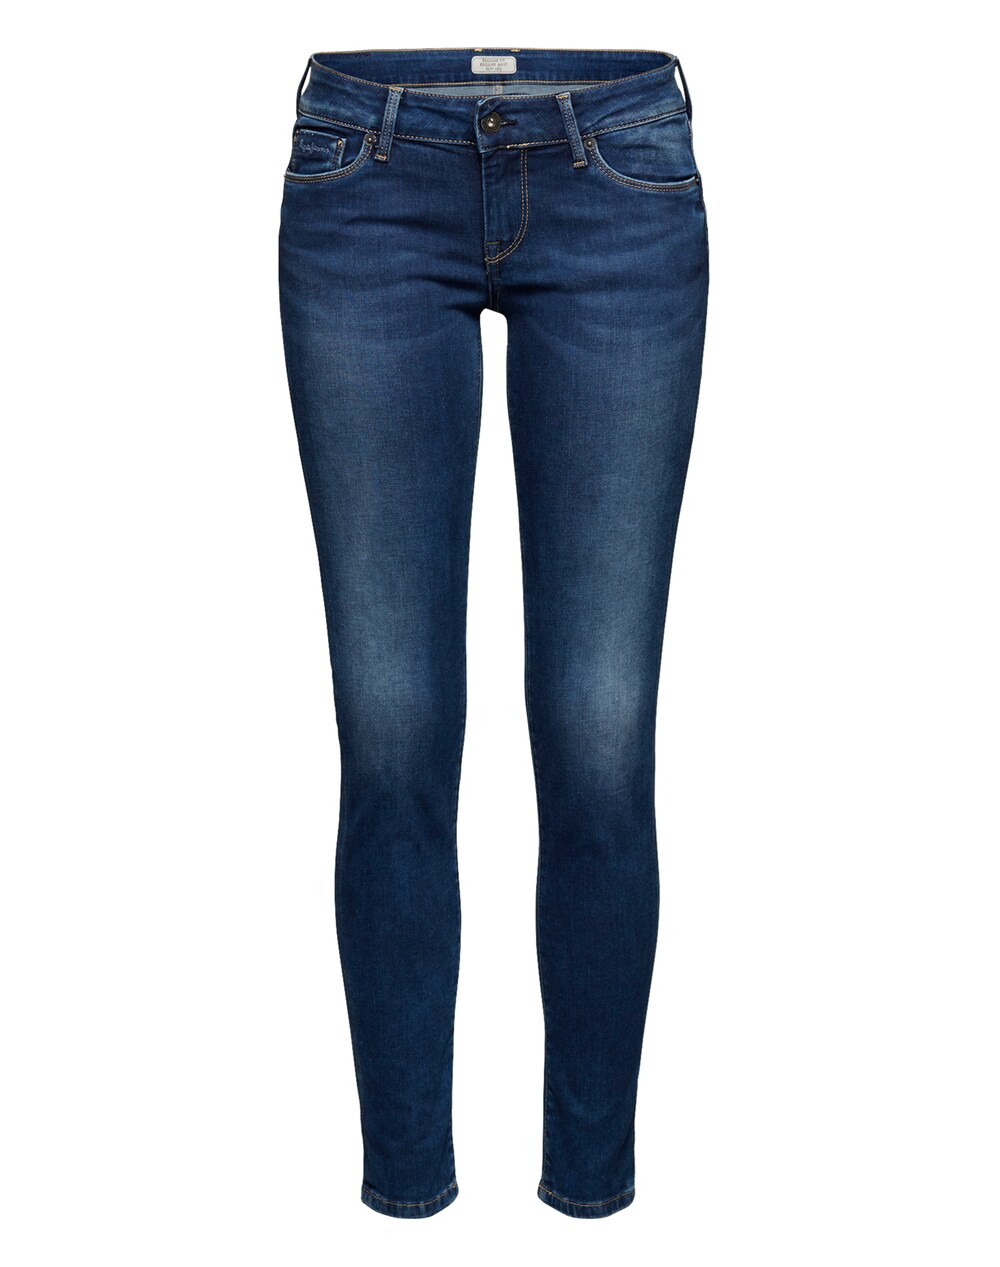 Узкие джинсы Pepe Jeans Soho, темно-синий